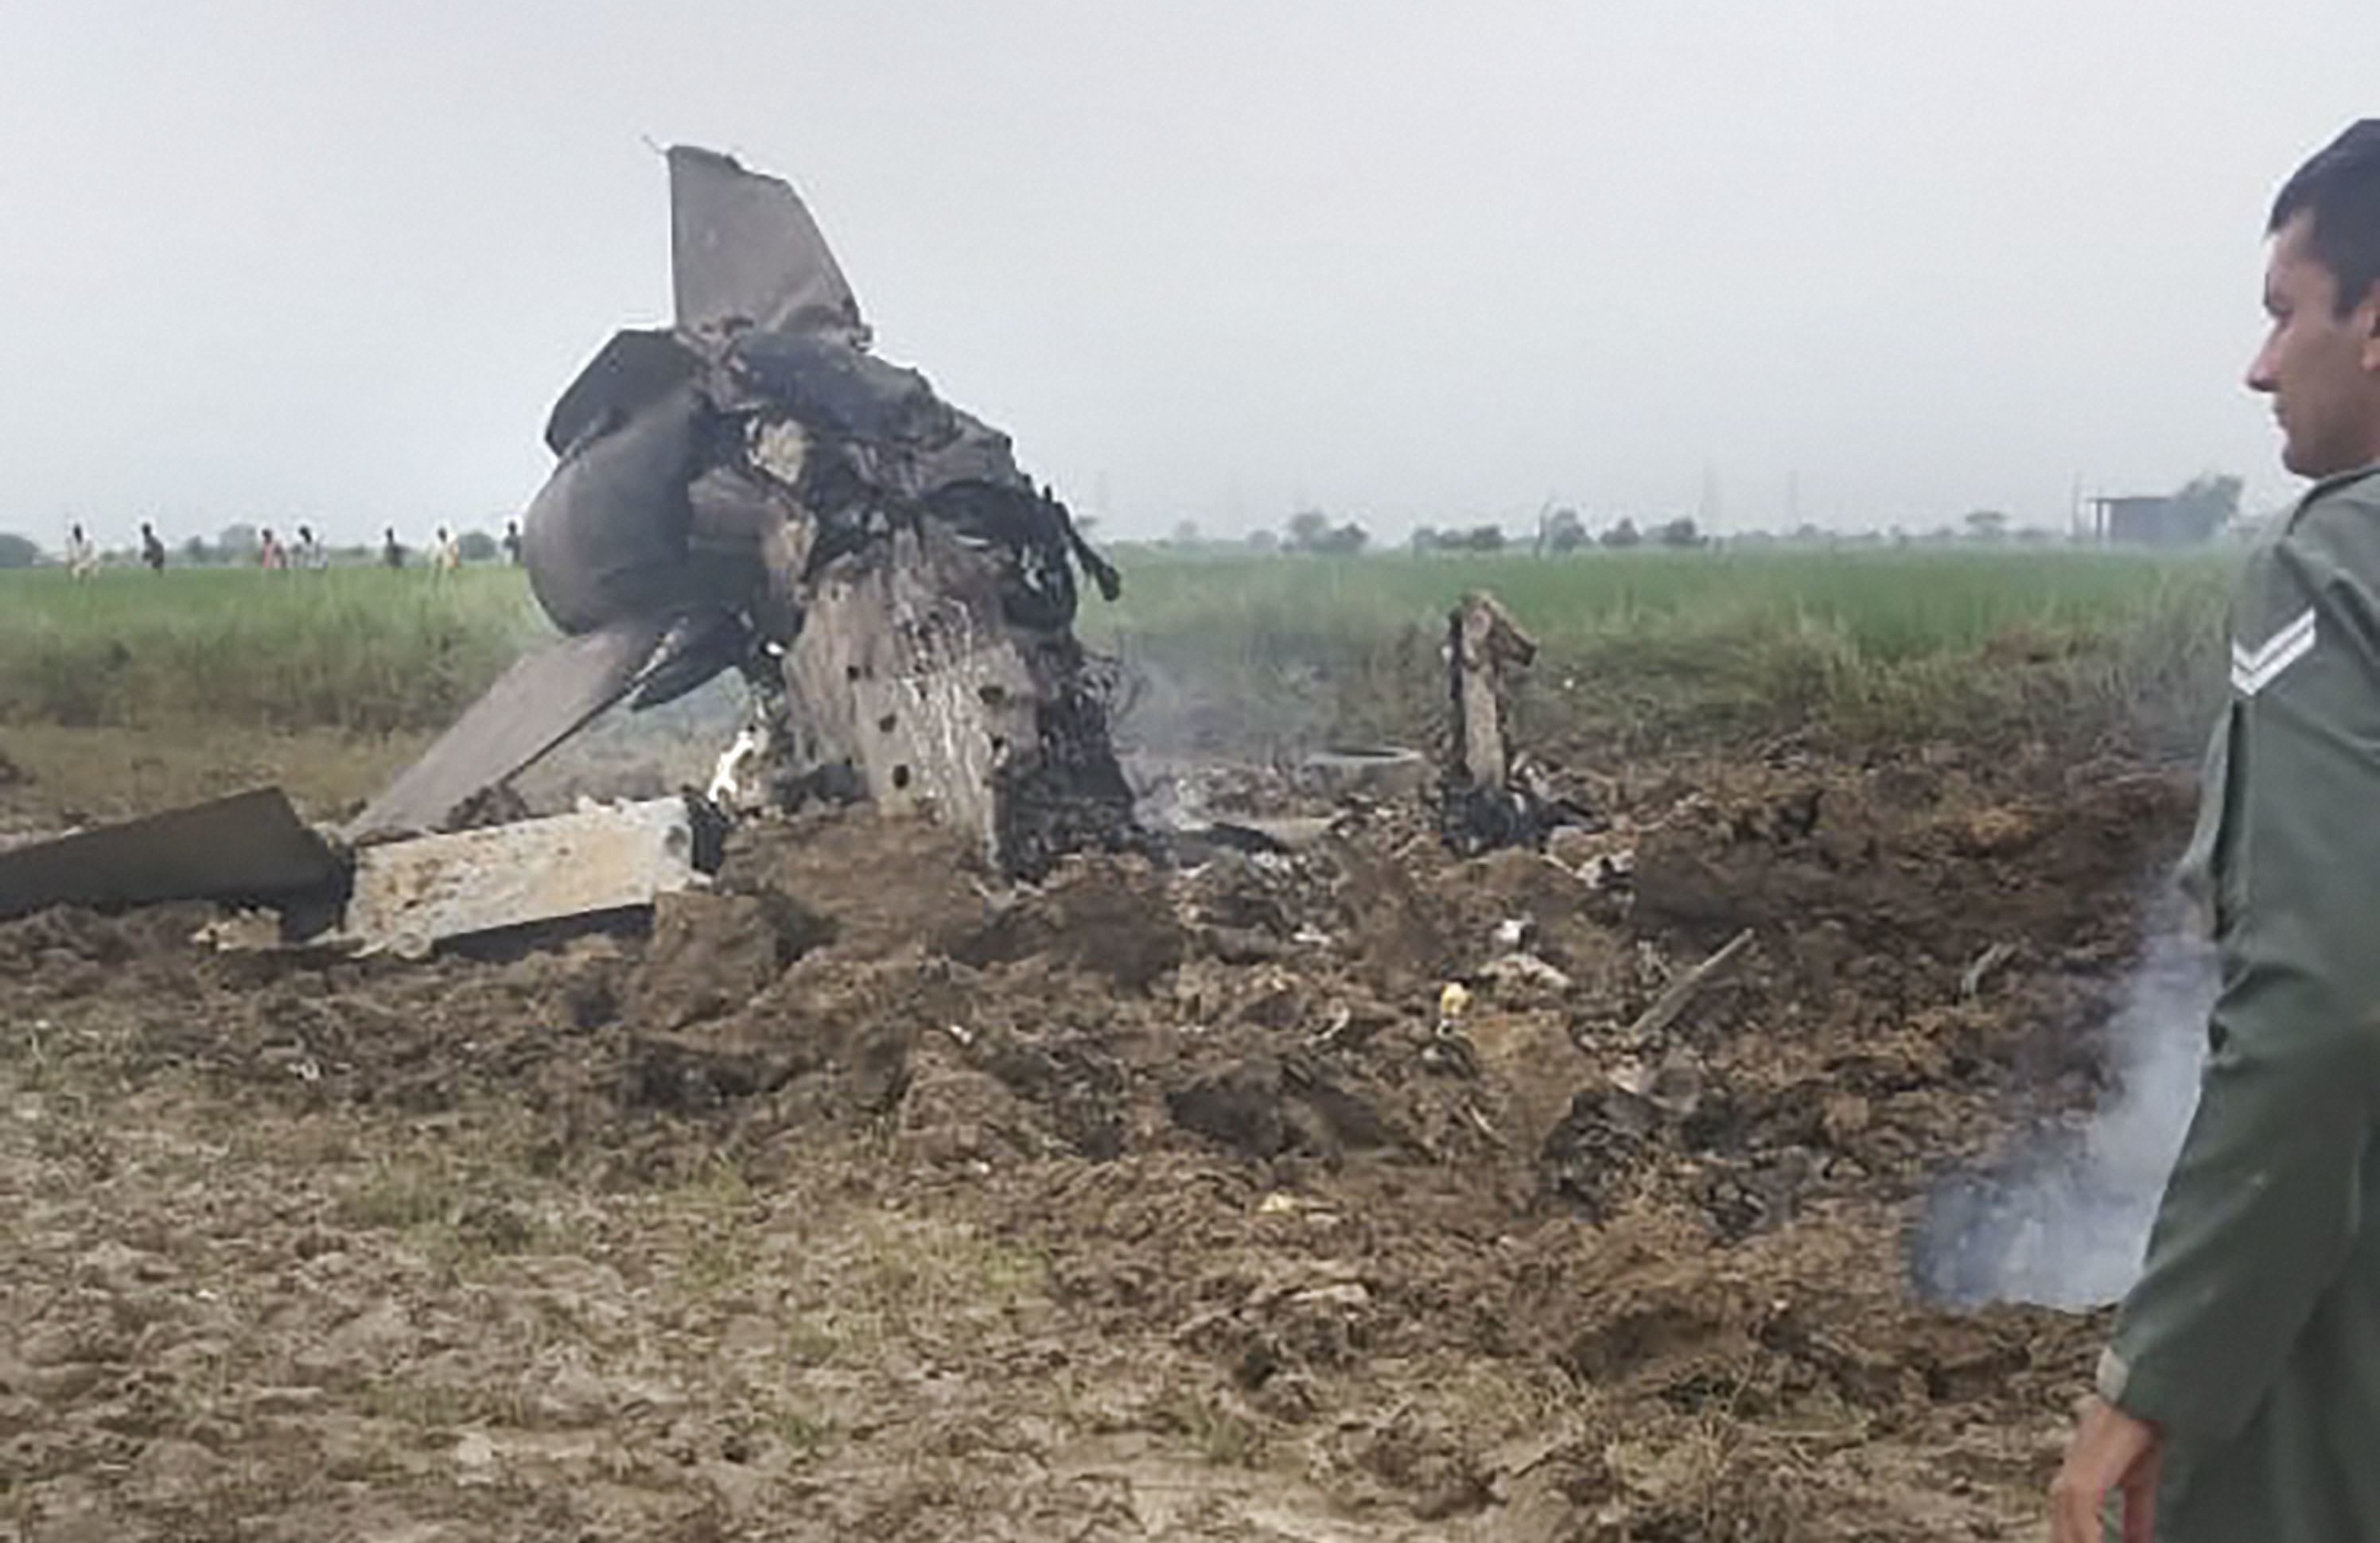 IAF aircraft crashed, IAF MiG-21 trainer aircraft, crashed, Indian Air Force, Madhya Pradesh, Bhind, Gwalior airbase, pilots eject safely